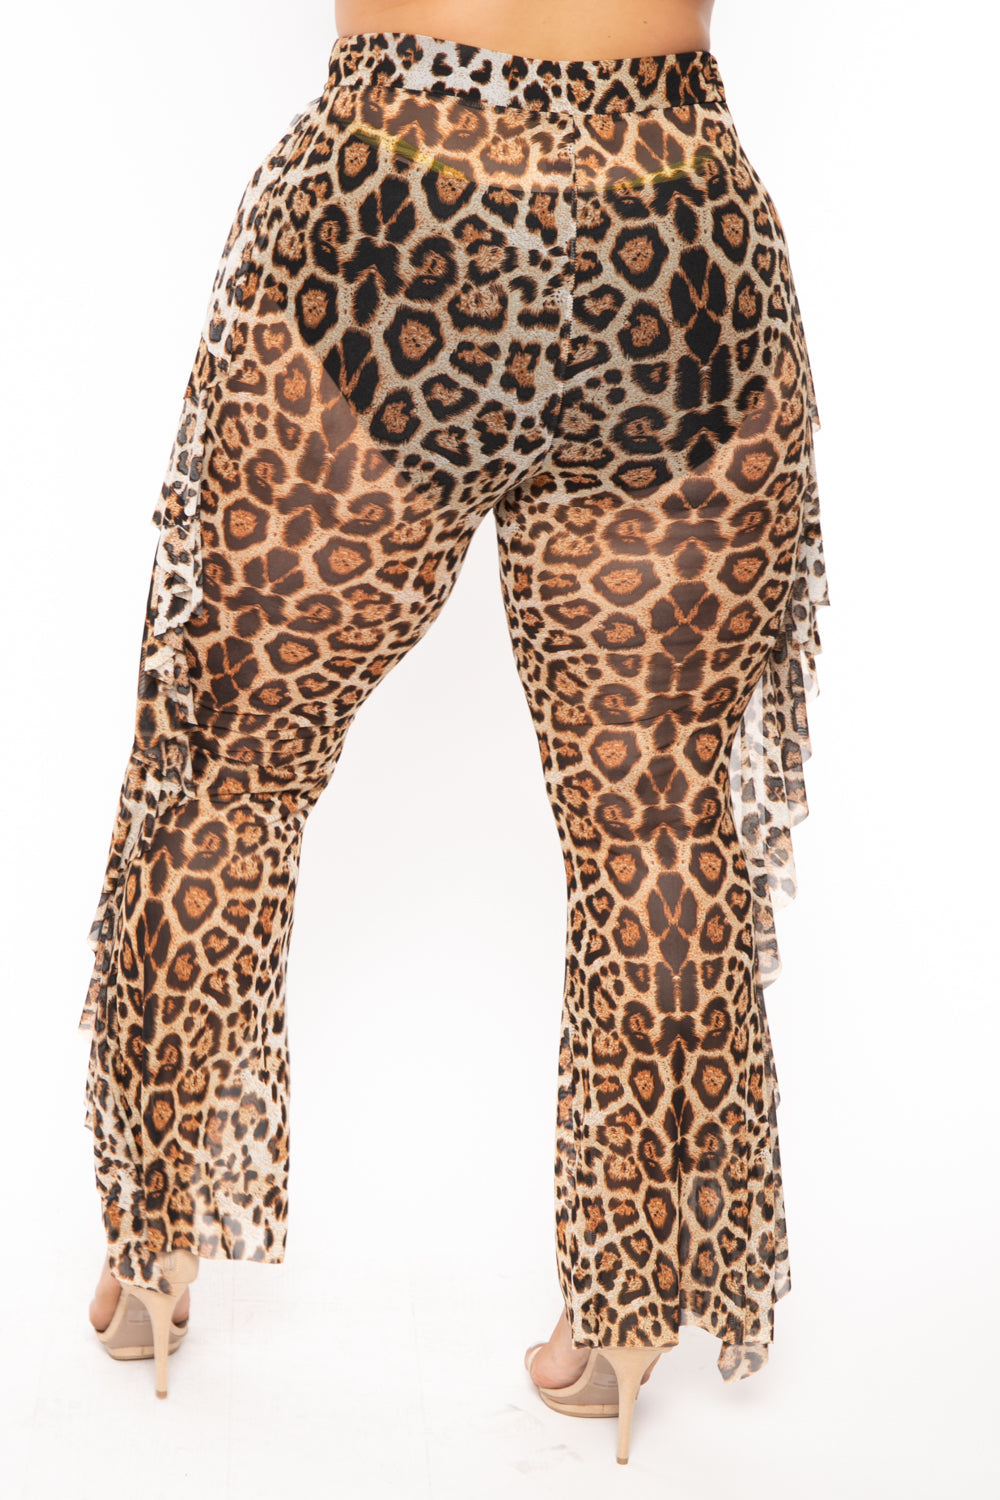 Anthropologie, Pants & Jumpsuits, Anthropologie All Fenix Camel Leopard  Cheetah Animal Print Leggings M Medium